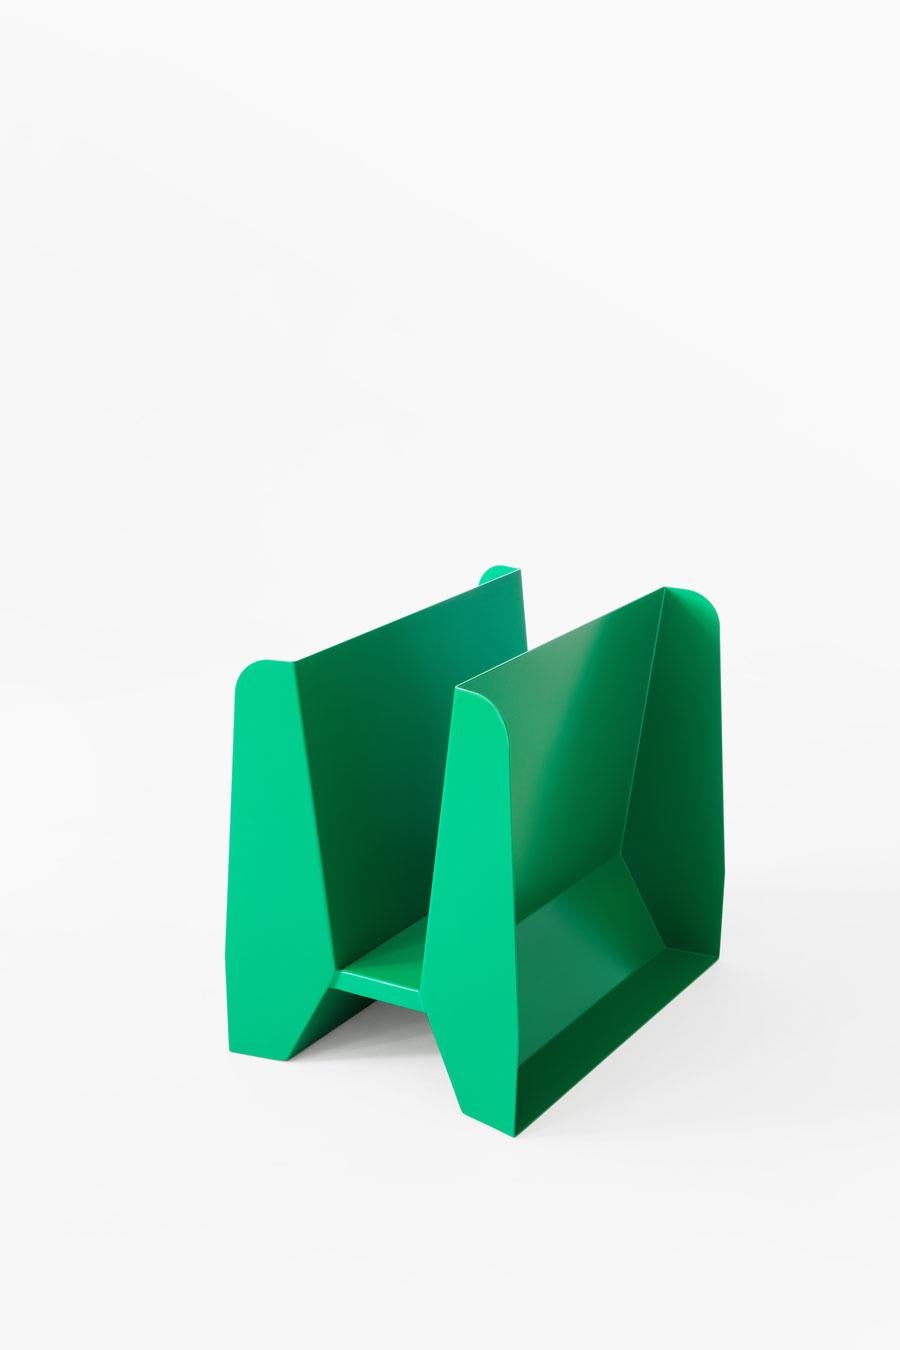 Adolfo Abejon Contemporary 'Adler' Green Metal Sculptural Magazine Rack In Good Condition In Barcelona, Barcelona